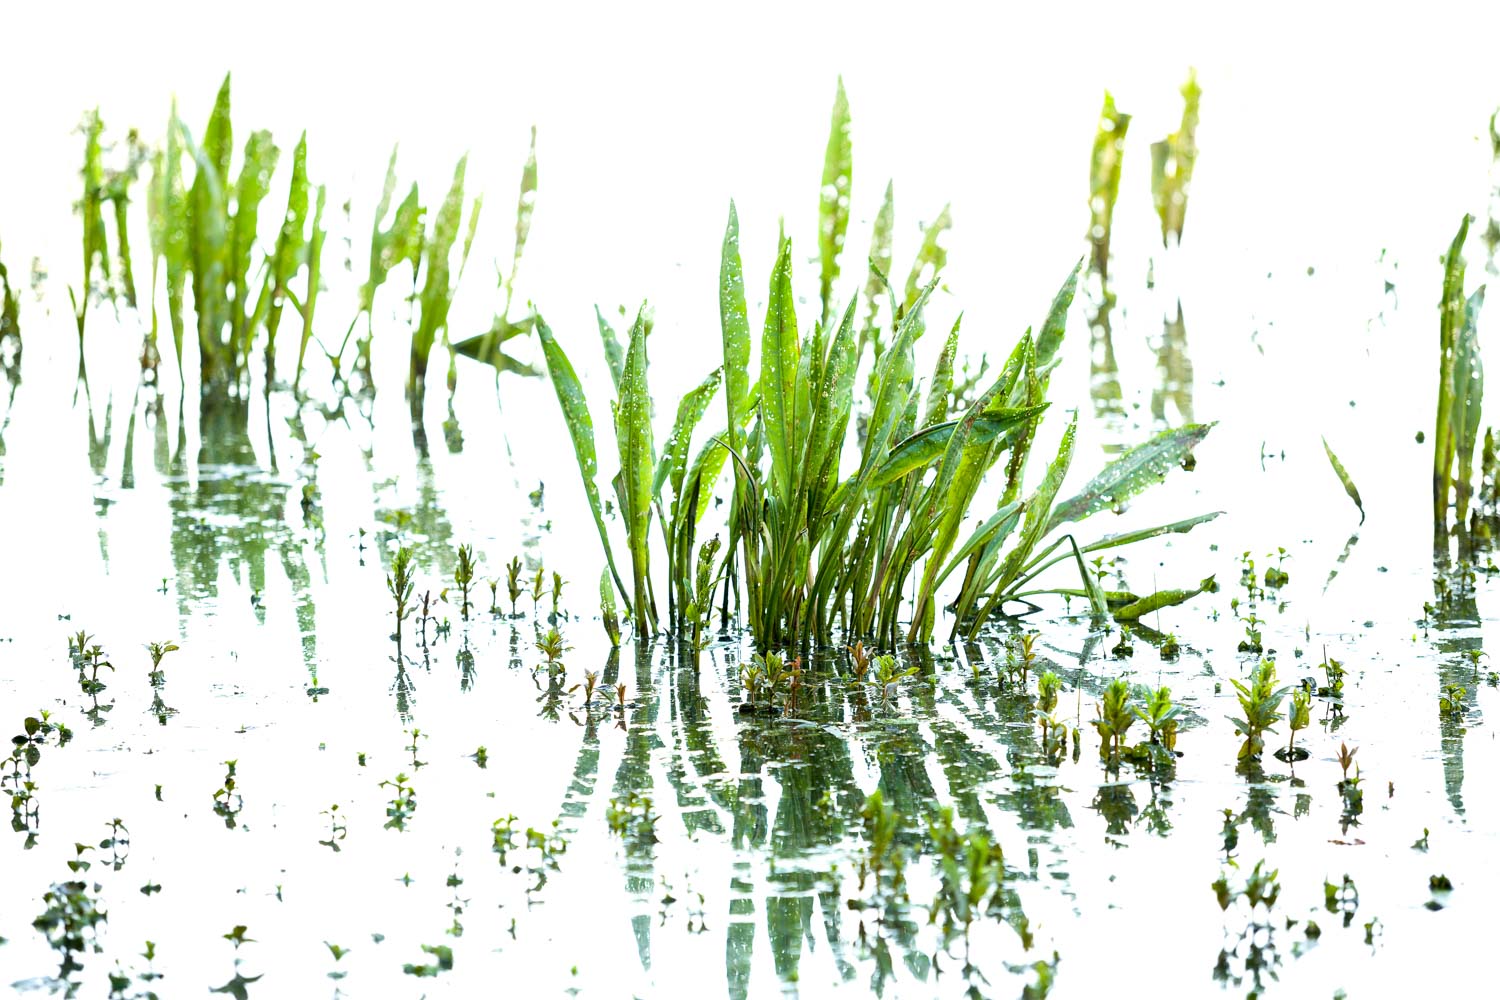 Minimalistic portrait of mirroring water plants by Karen Ketels